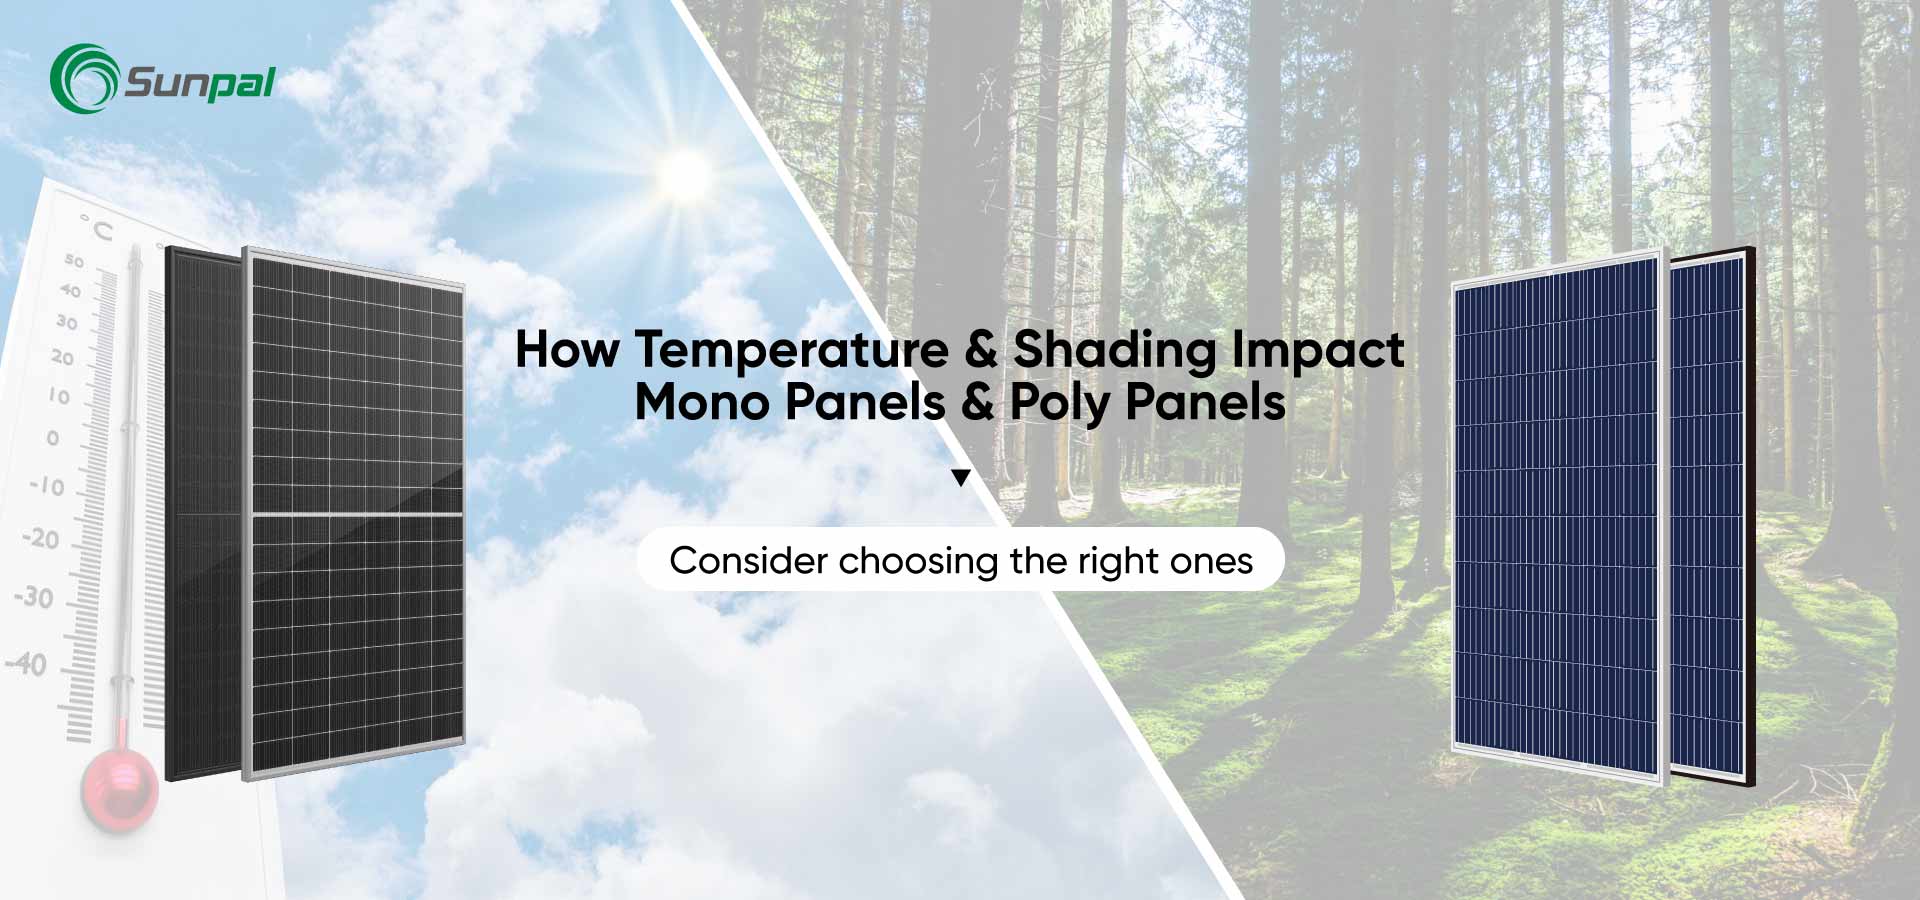 Temperatura i cieniowanie: wpływ na panele mono i poli